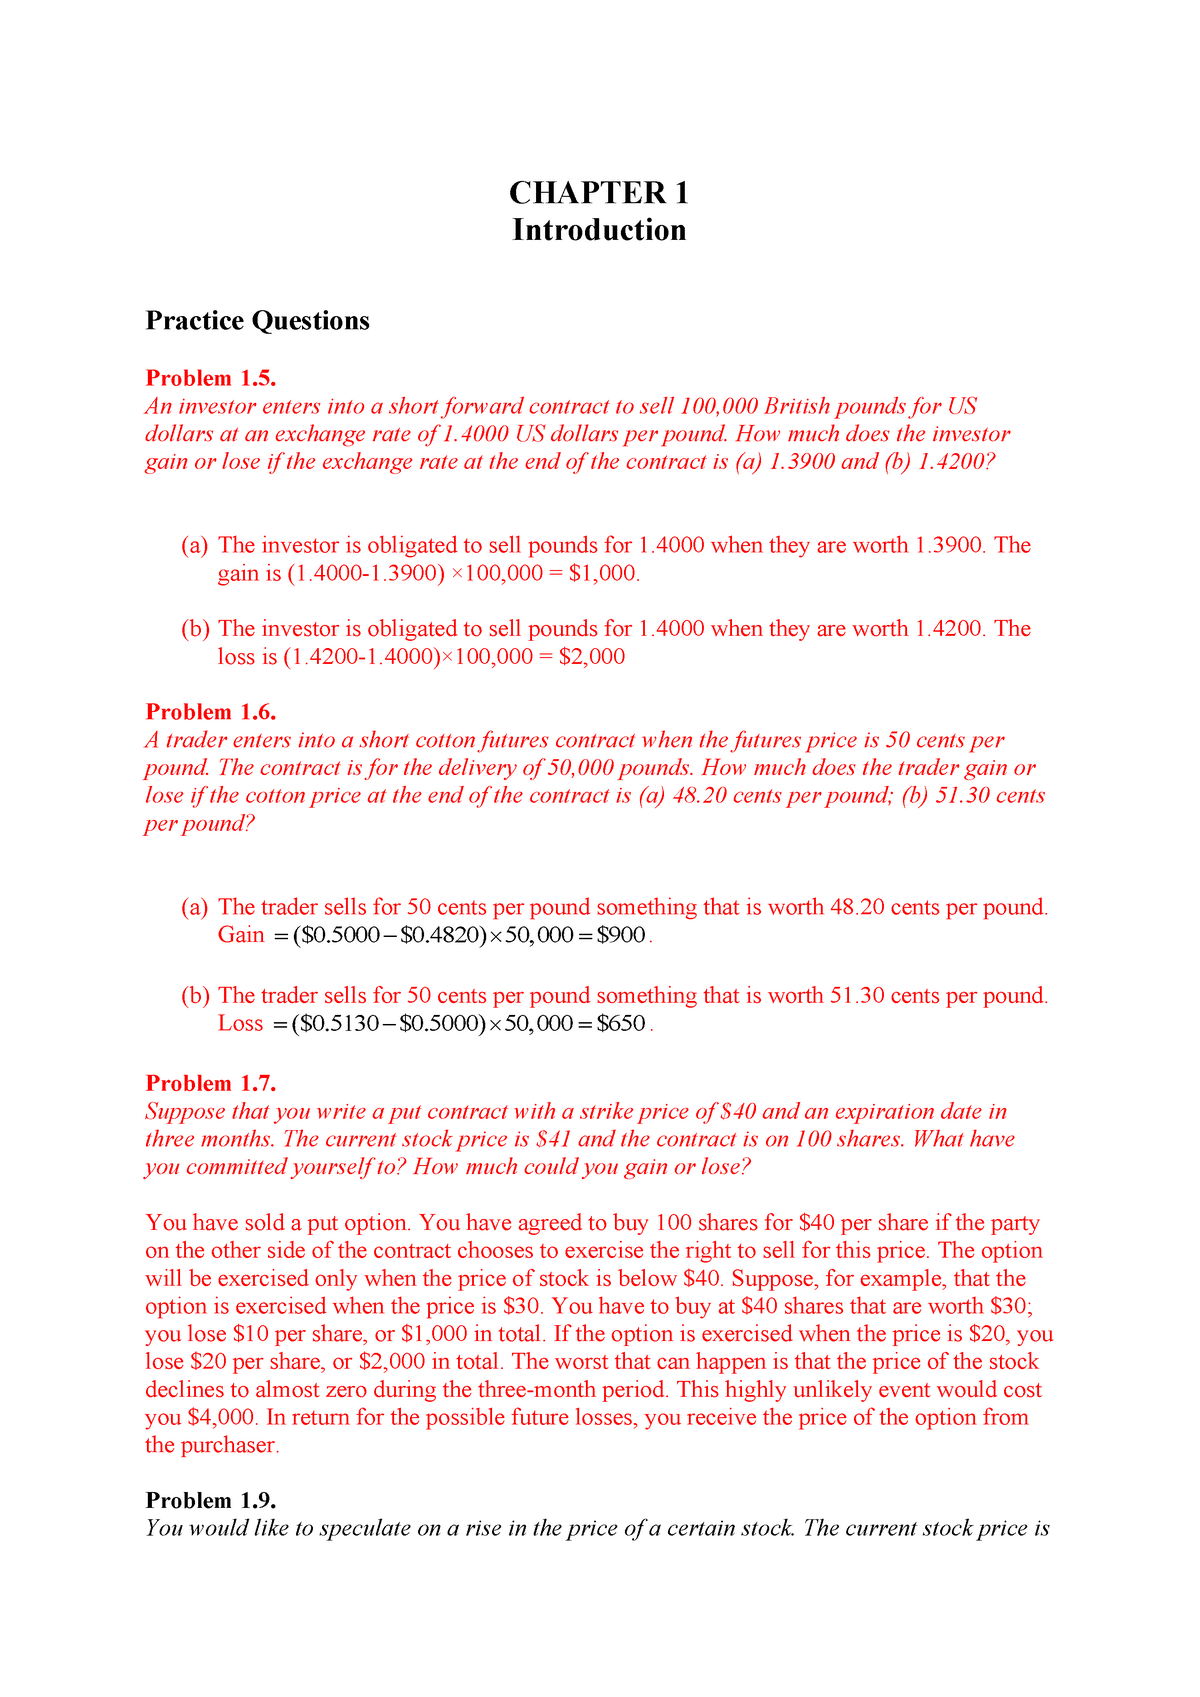 Chapter 27 solution - Derivatives - F27 - DU - StuDocu